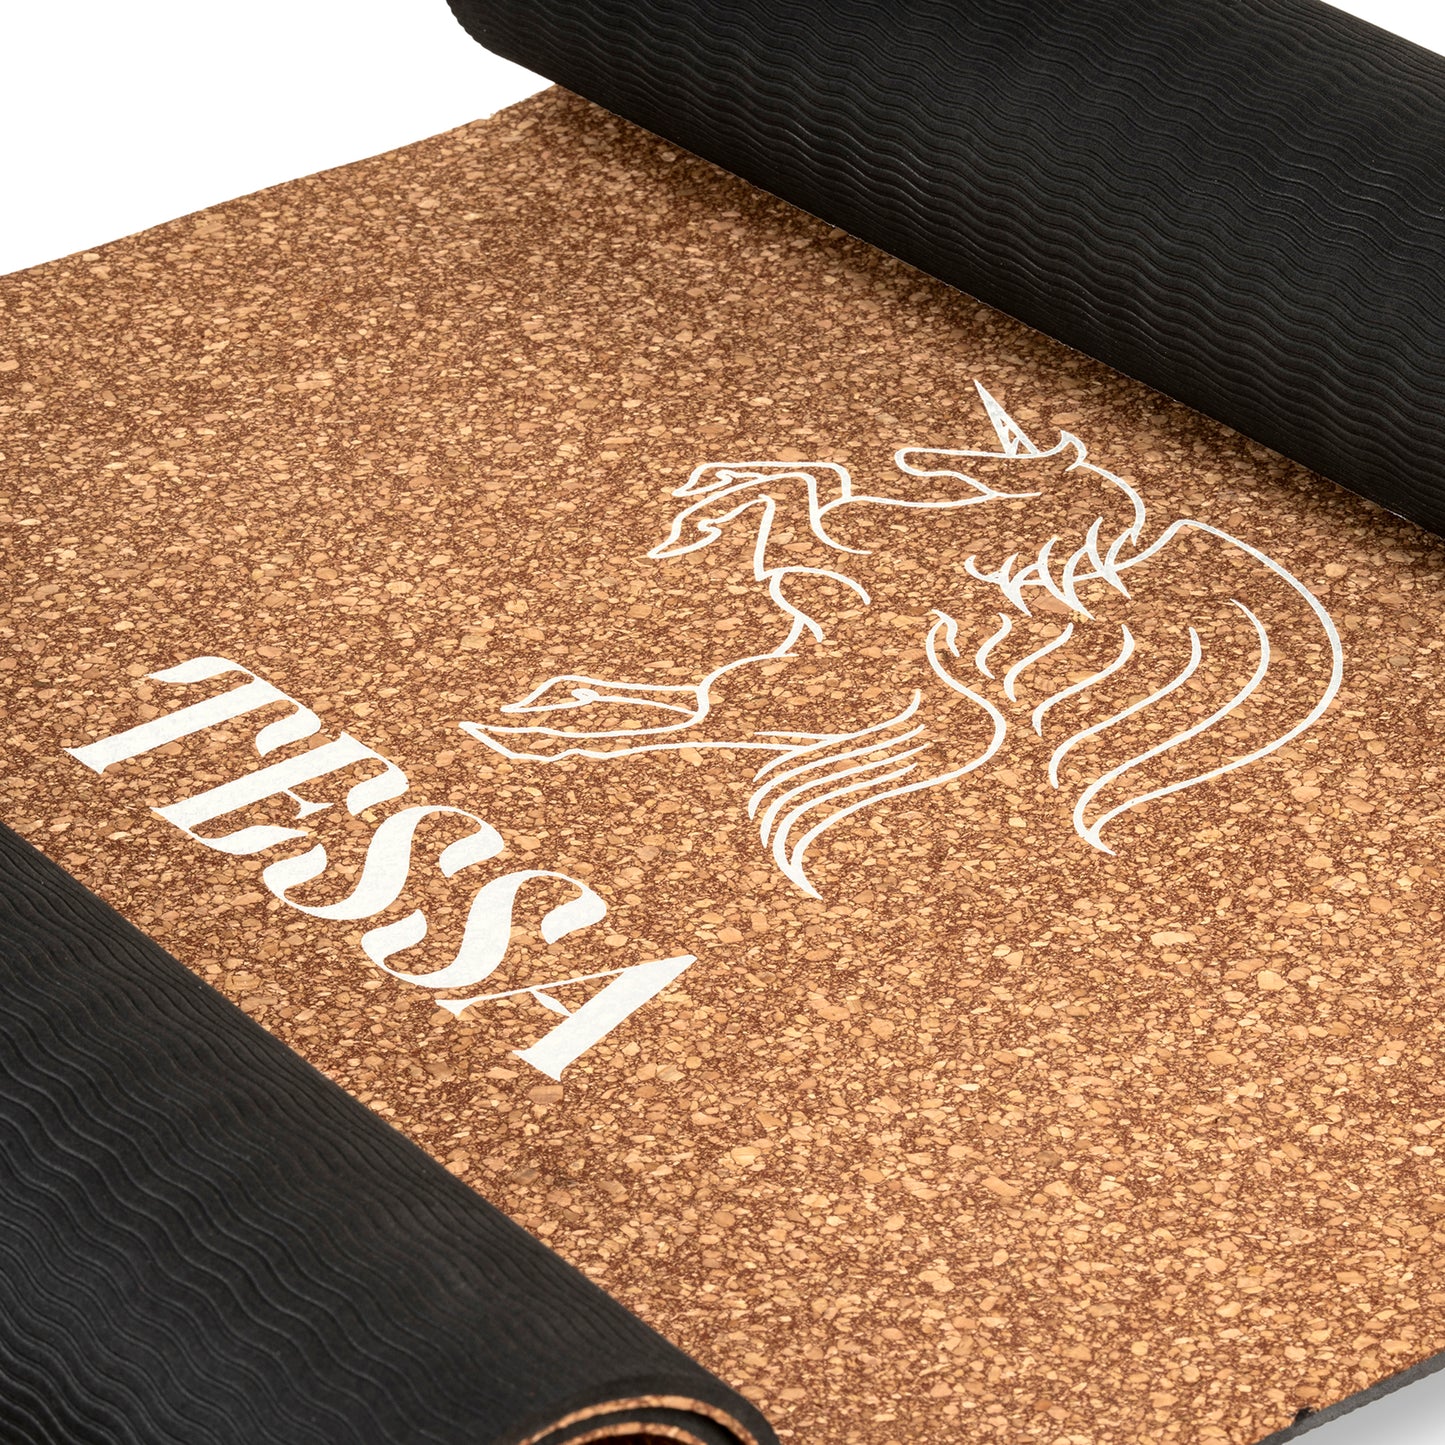 Tessa - Premium Cork Yoga Mat for Men and Women (6mm)